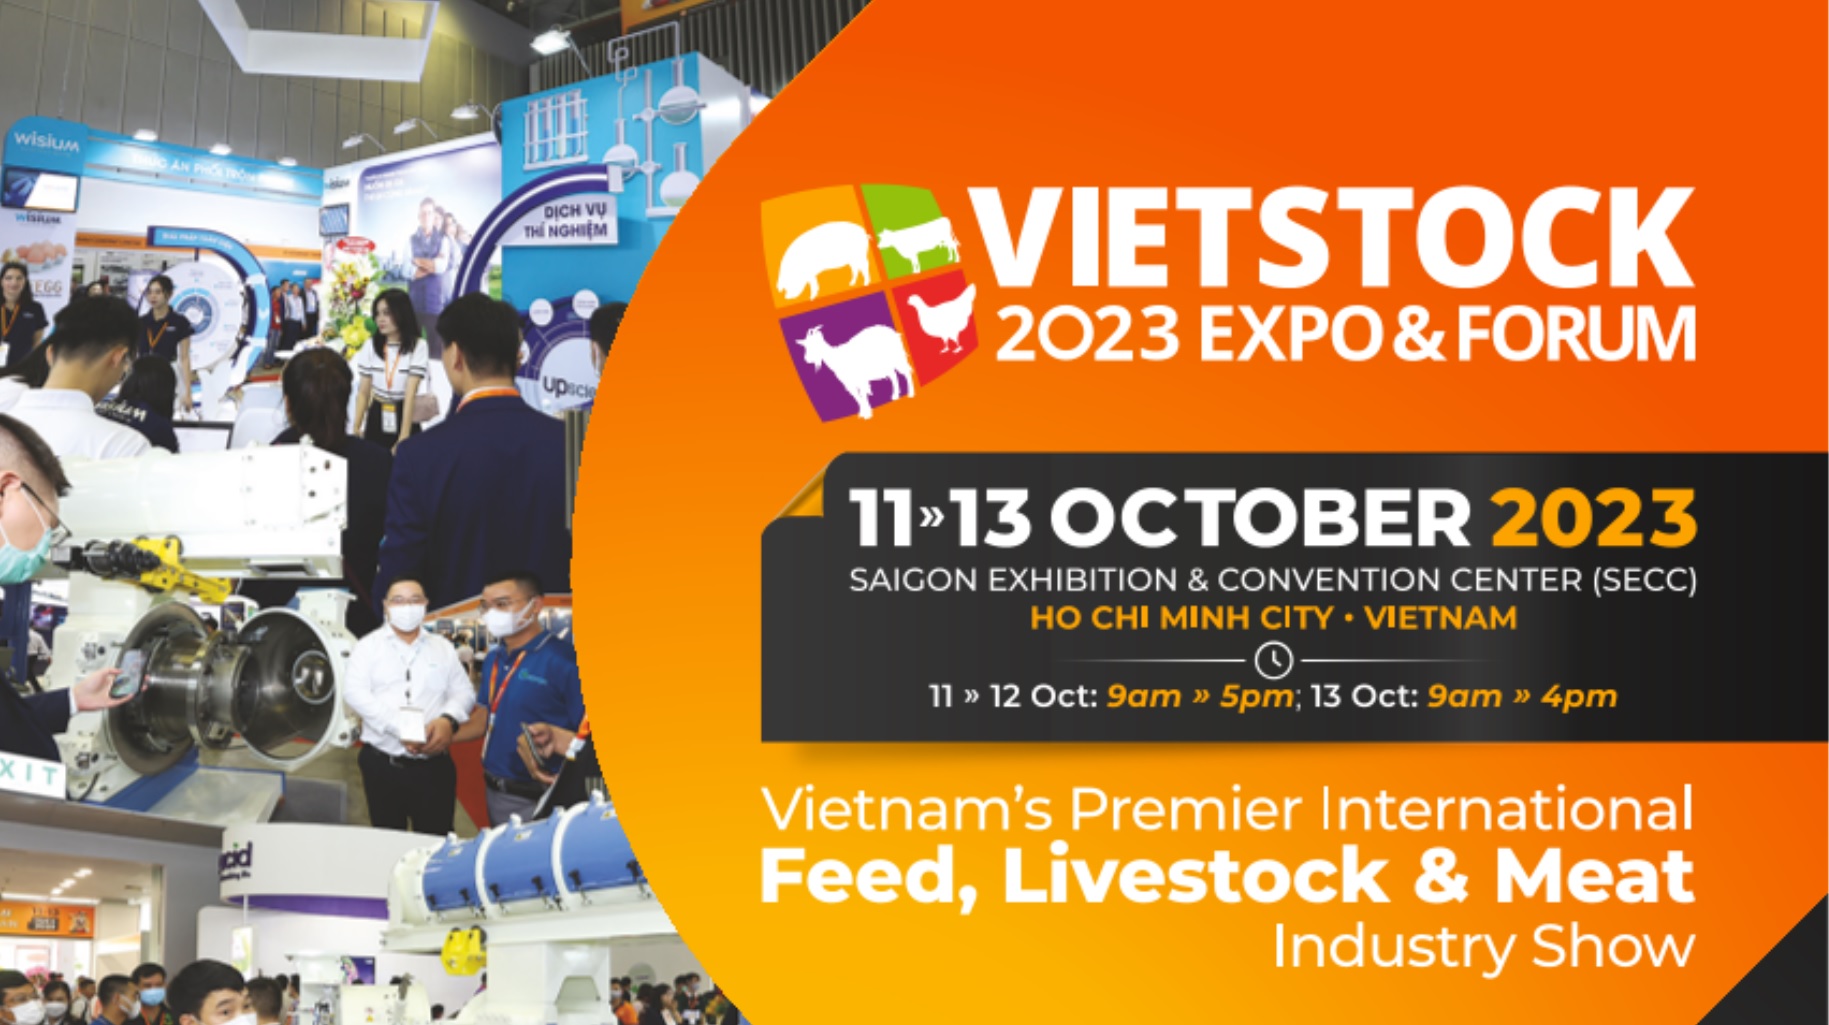 VIETSTOCK - The Vietnam’s Premier International Feed, Livestock, Aquaculture & Meat Industry Show 